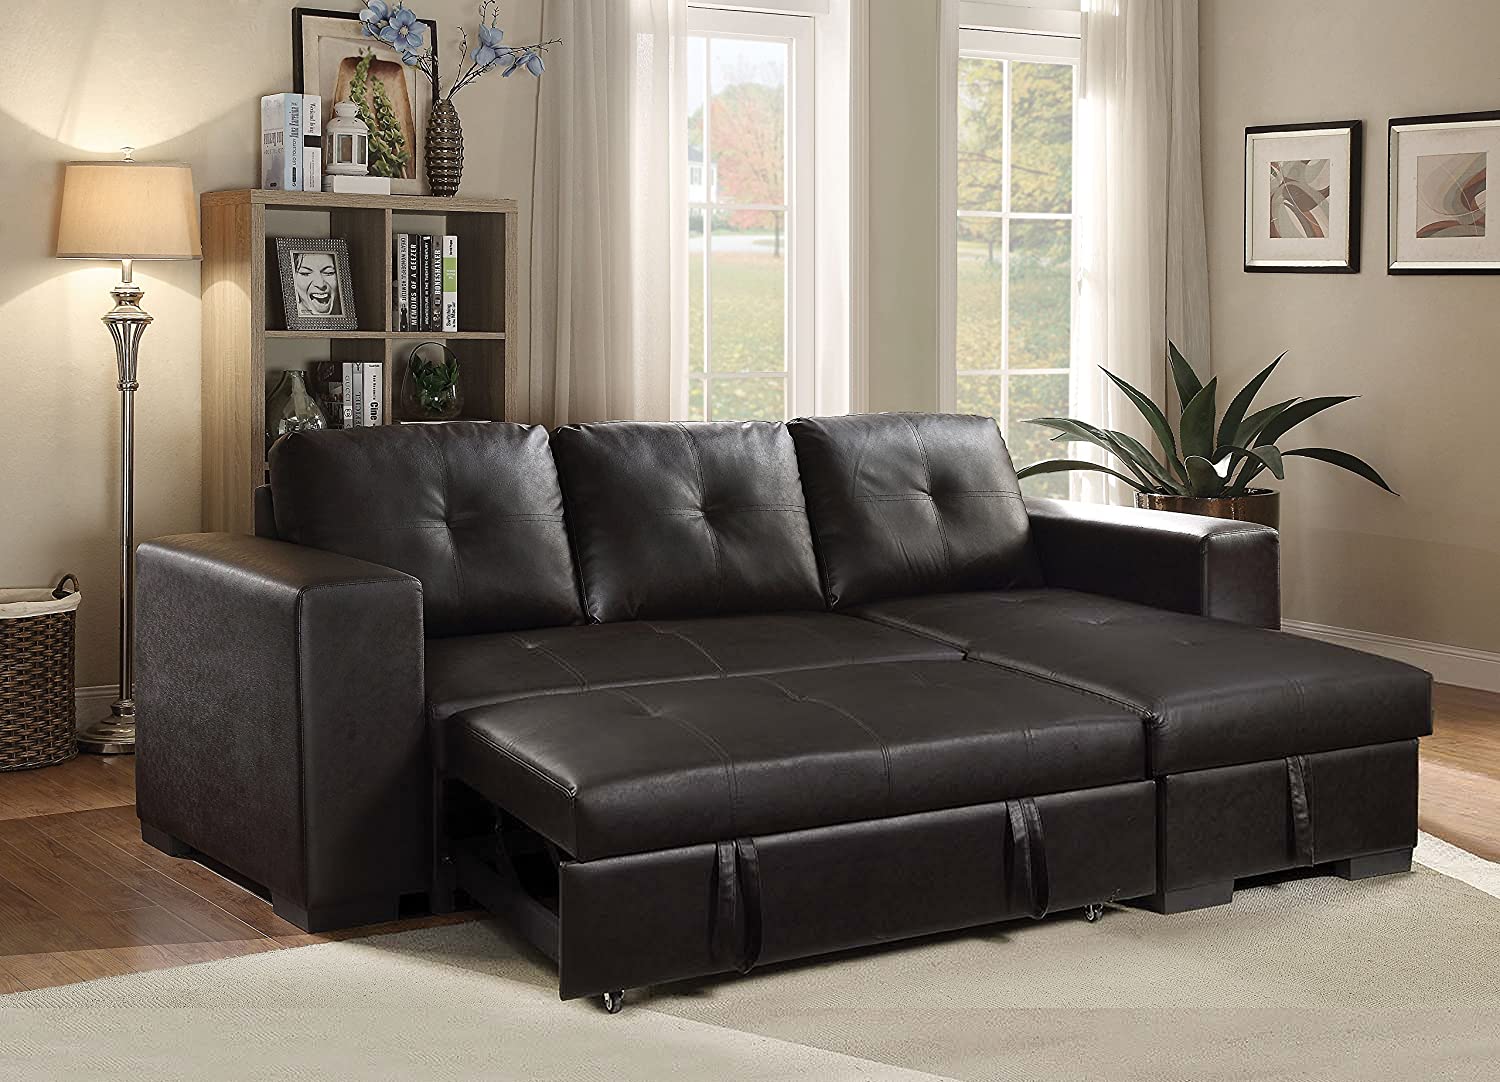 leather sectional sleeper sofa costco